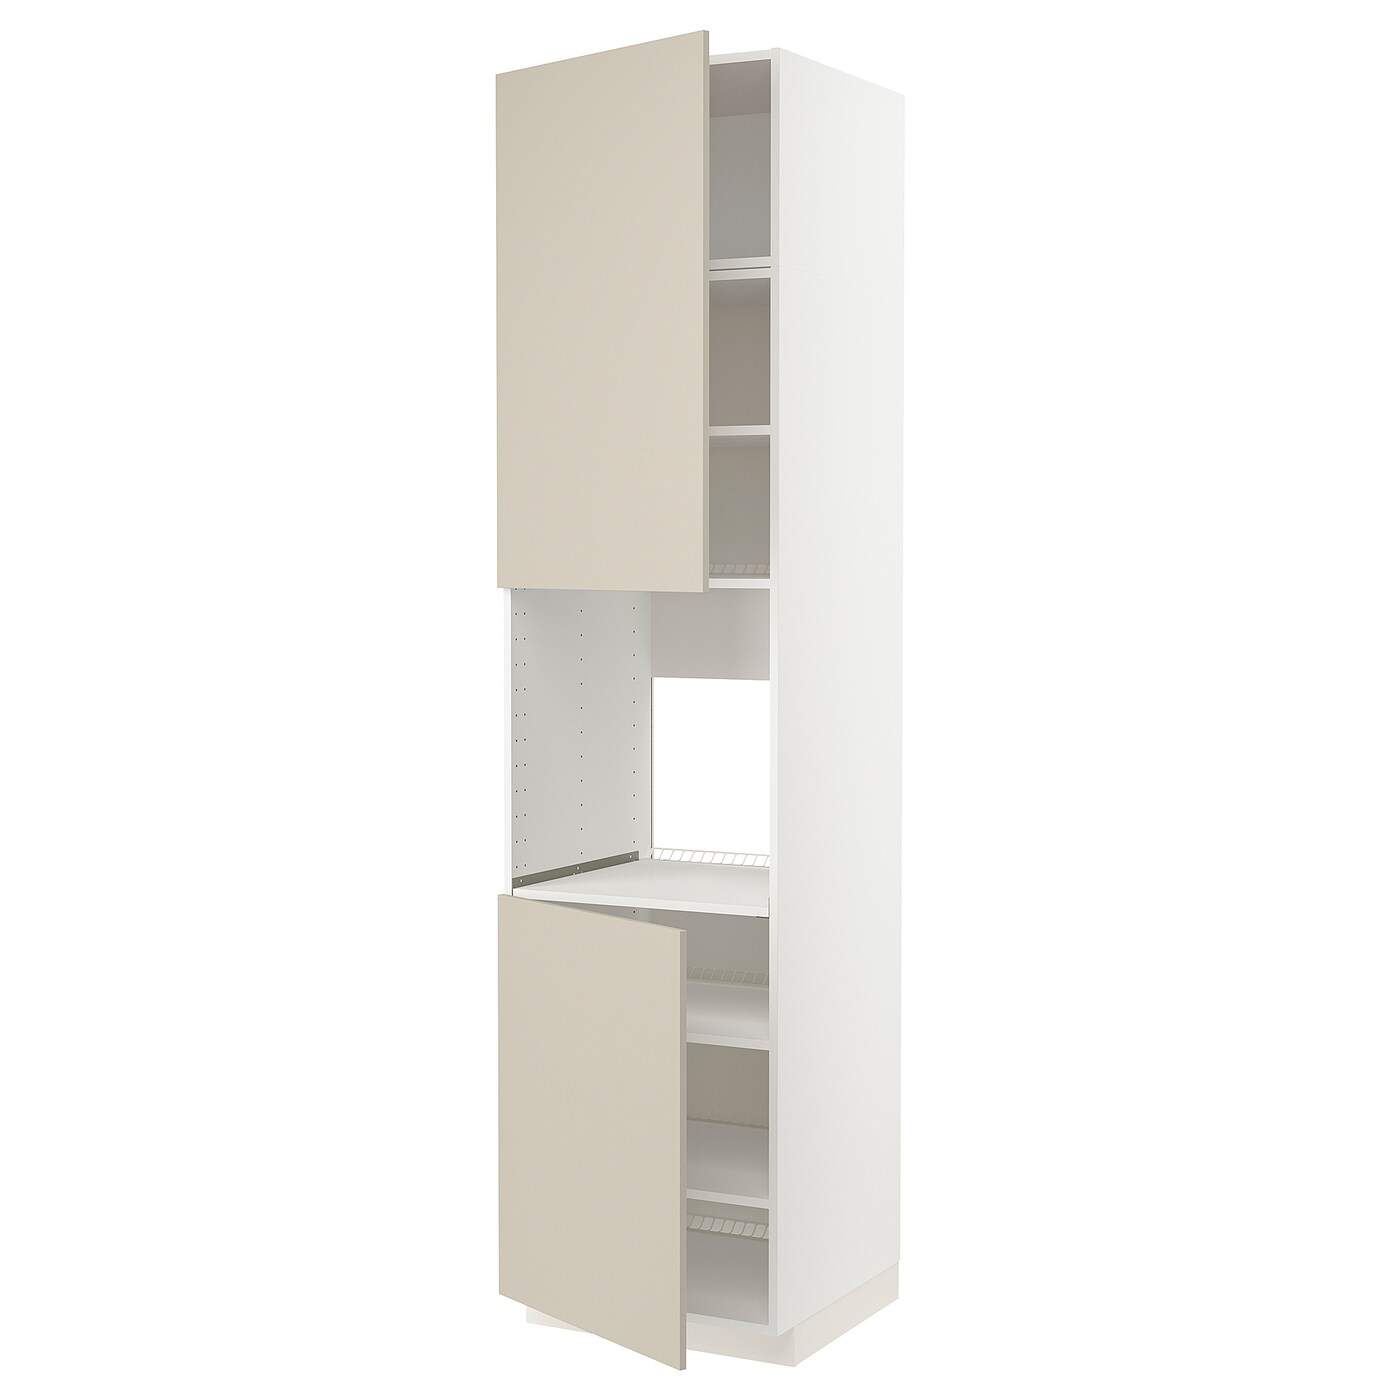 Высокий кухонный шкаф с полками - IKEA METOD/МЕТОД ИКЕА, 240х60х60 см, белый/бежевый